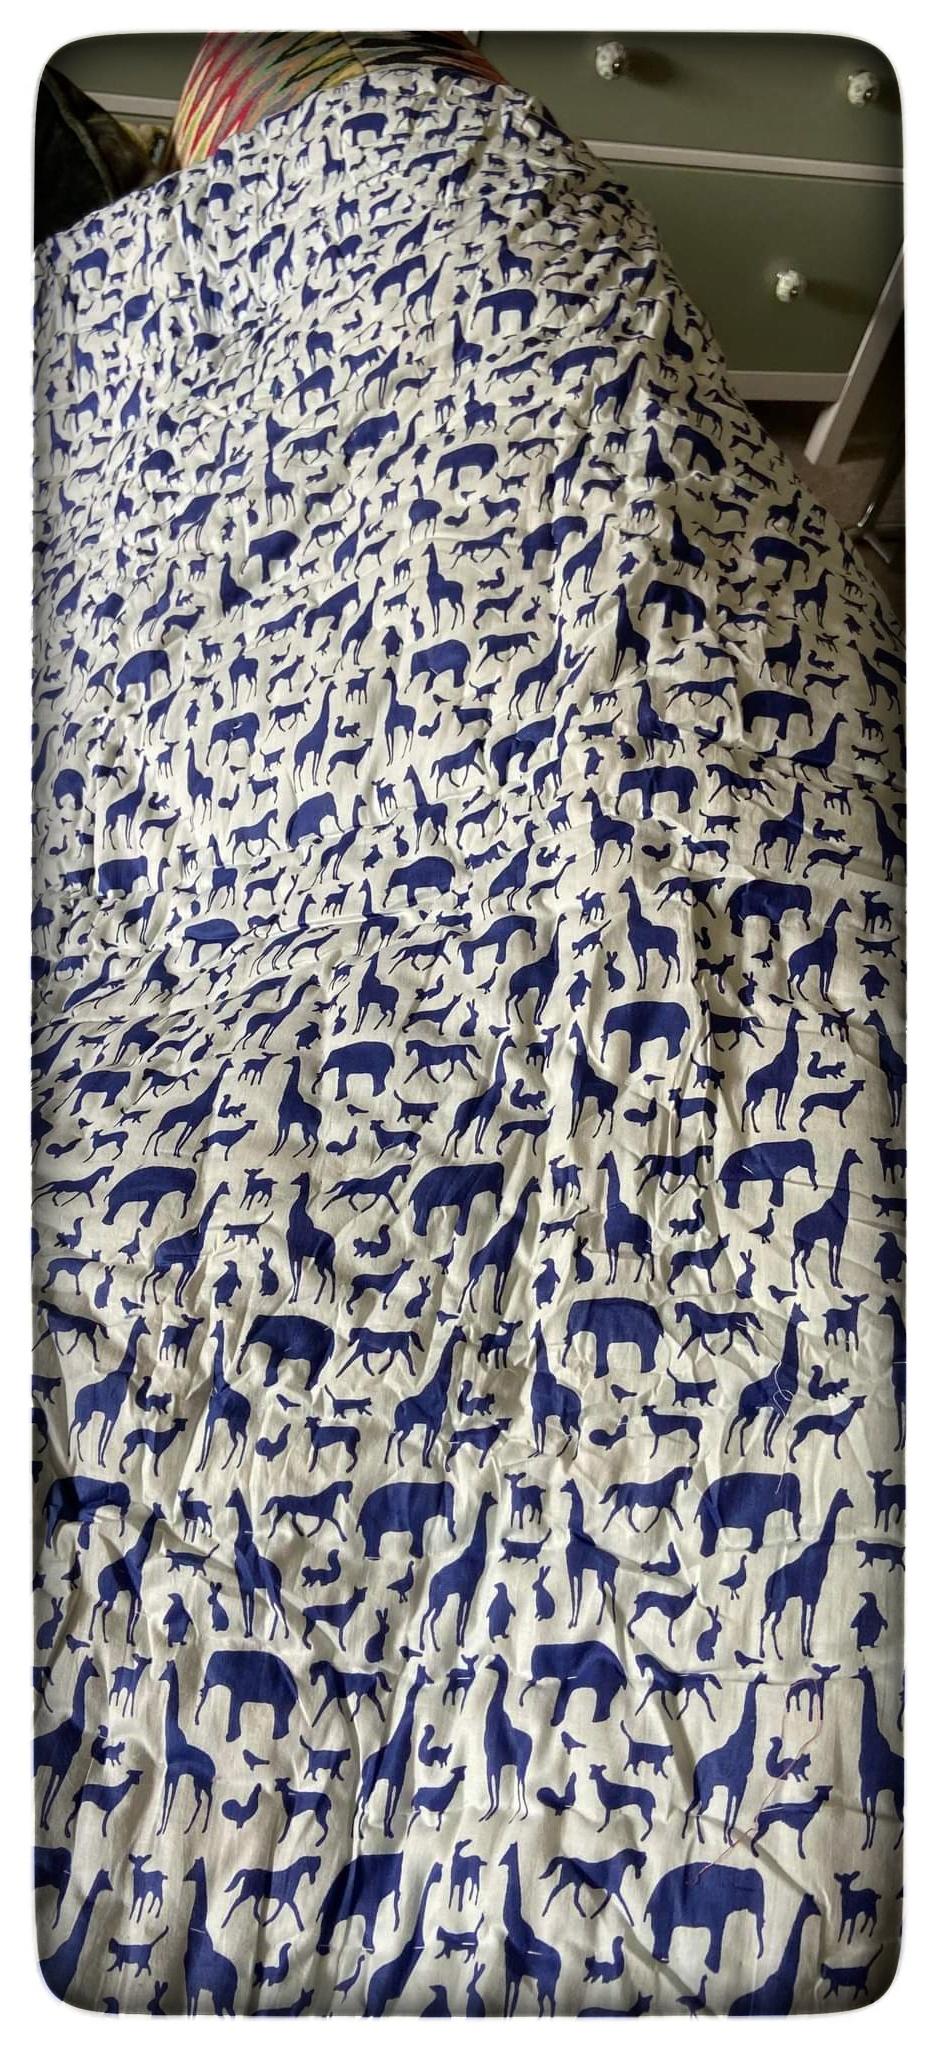 Navy Blue Animal Print Baby Quilt